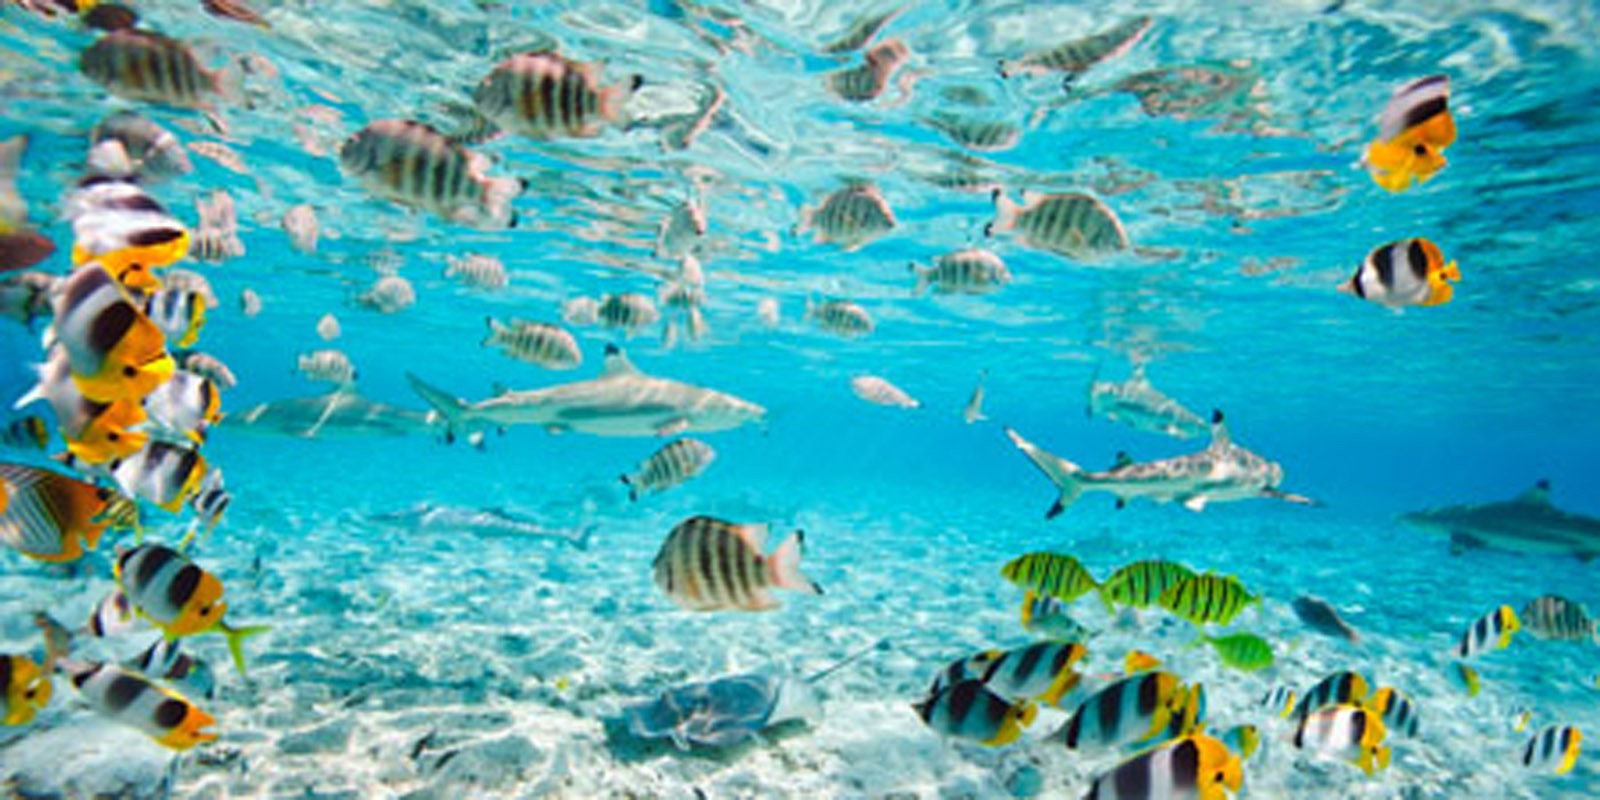 Pangea Images - Fish and sharks in Bora Bora lagoon